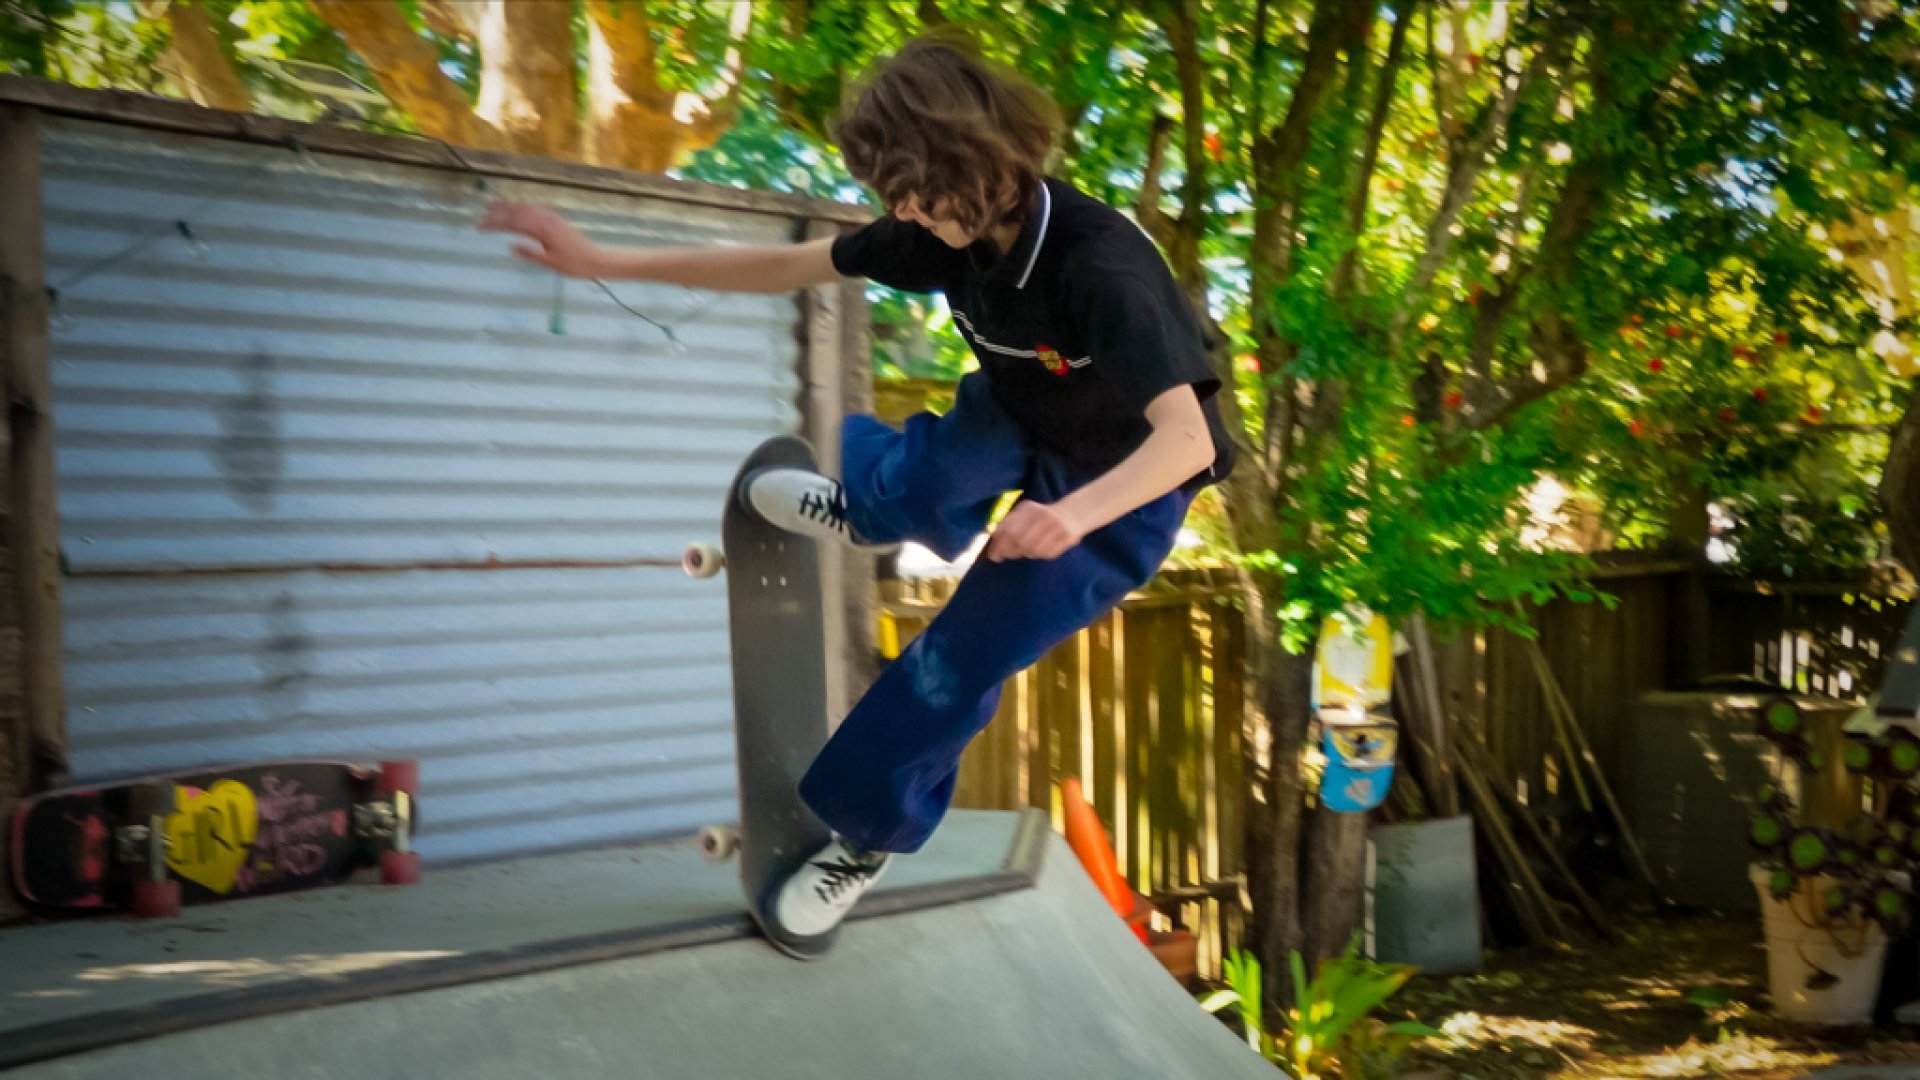 skateboarder demonstrating a switch blunt